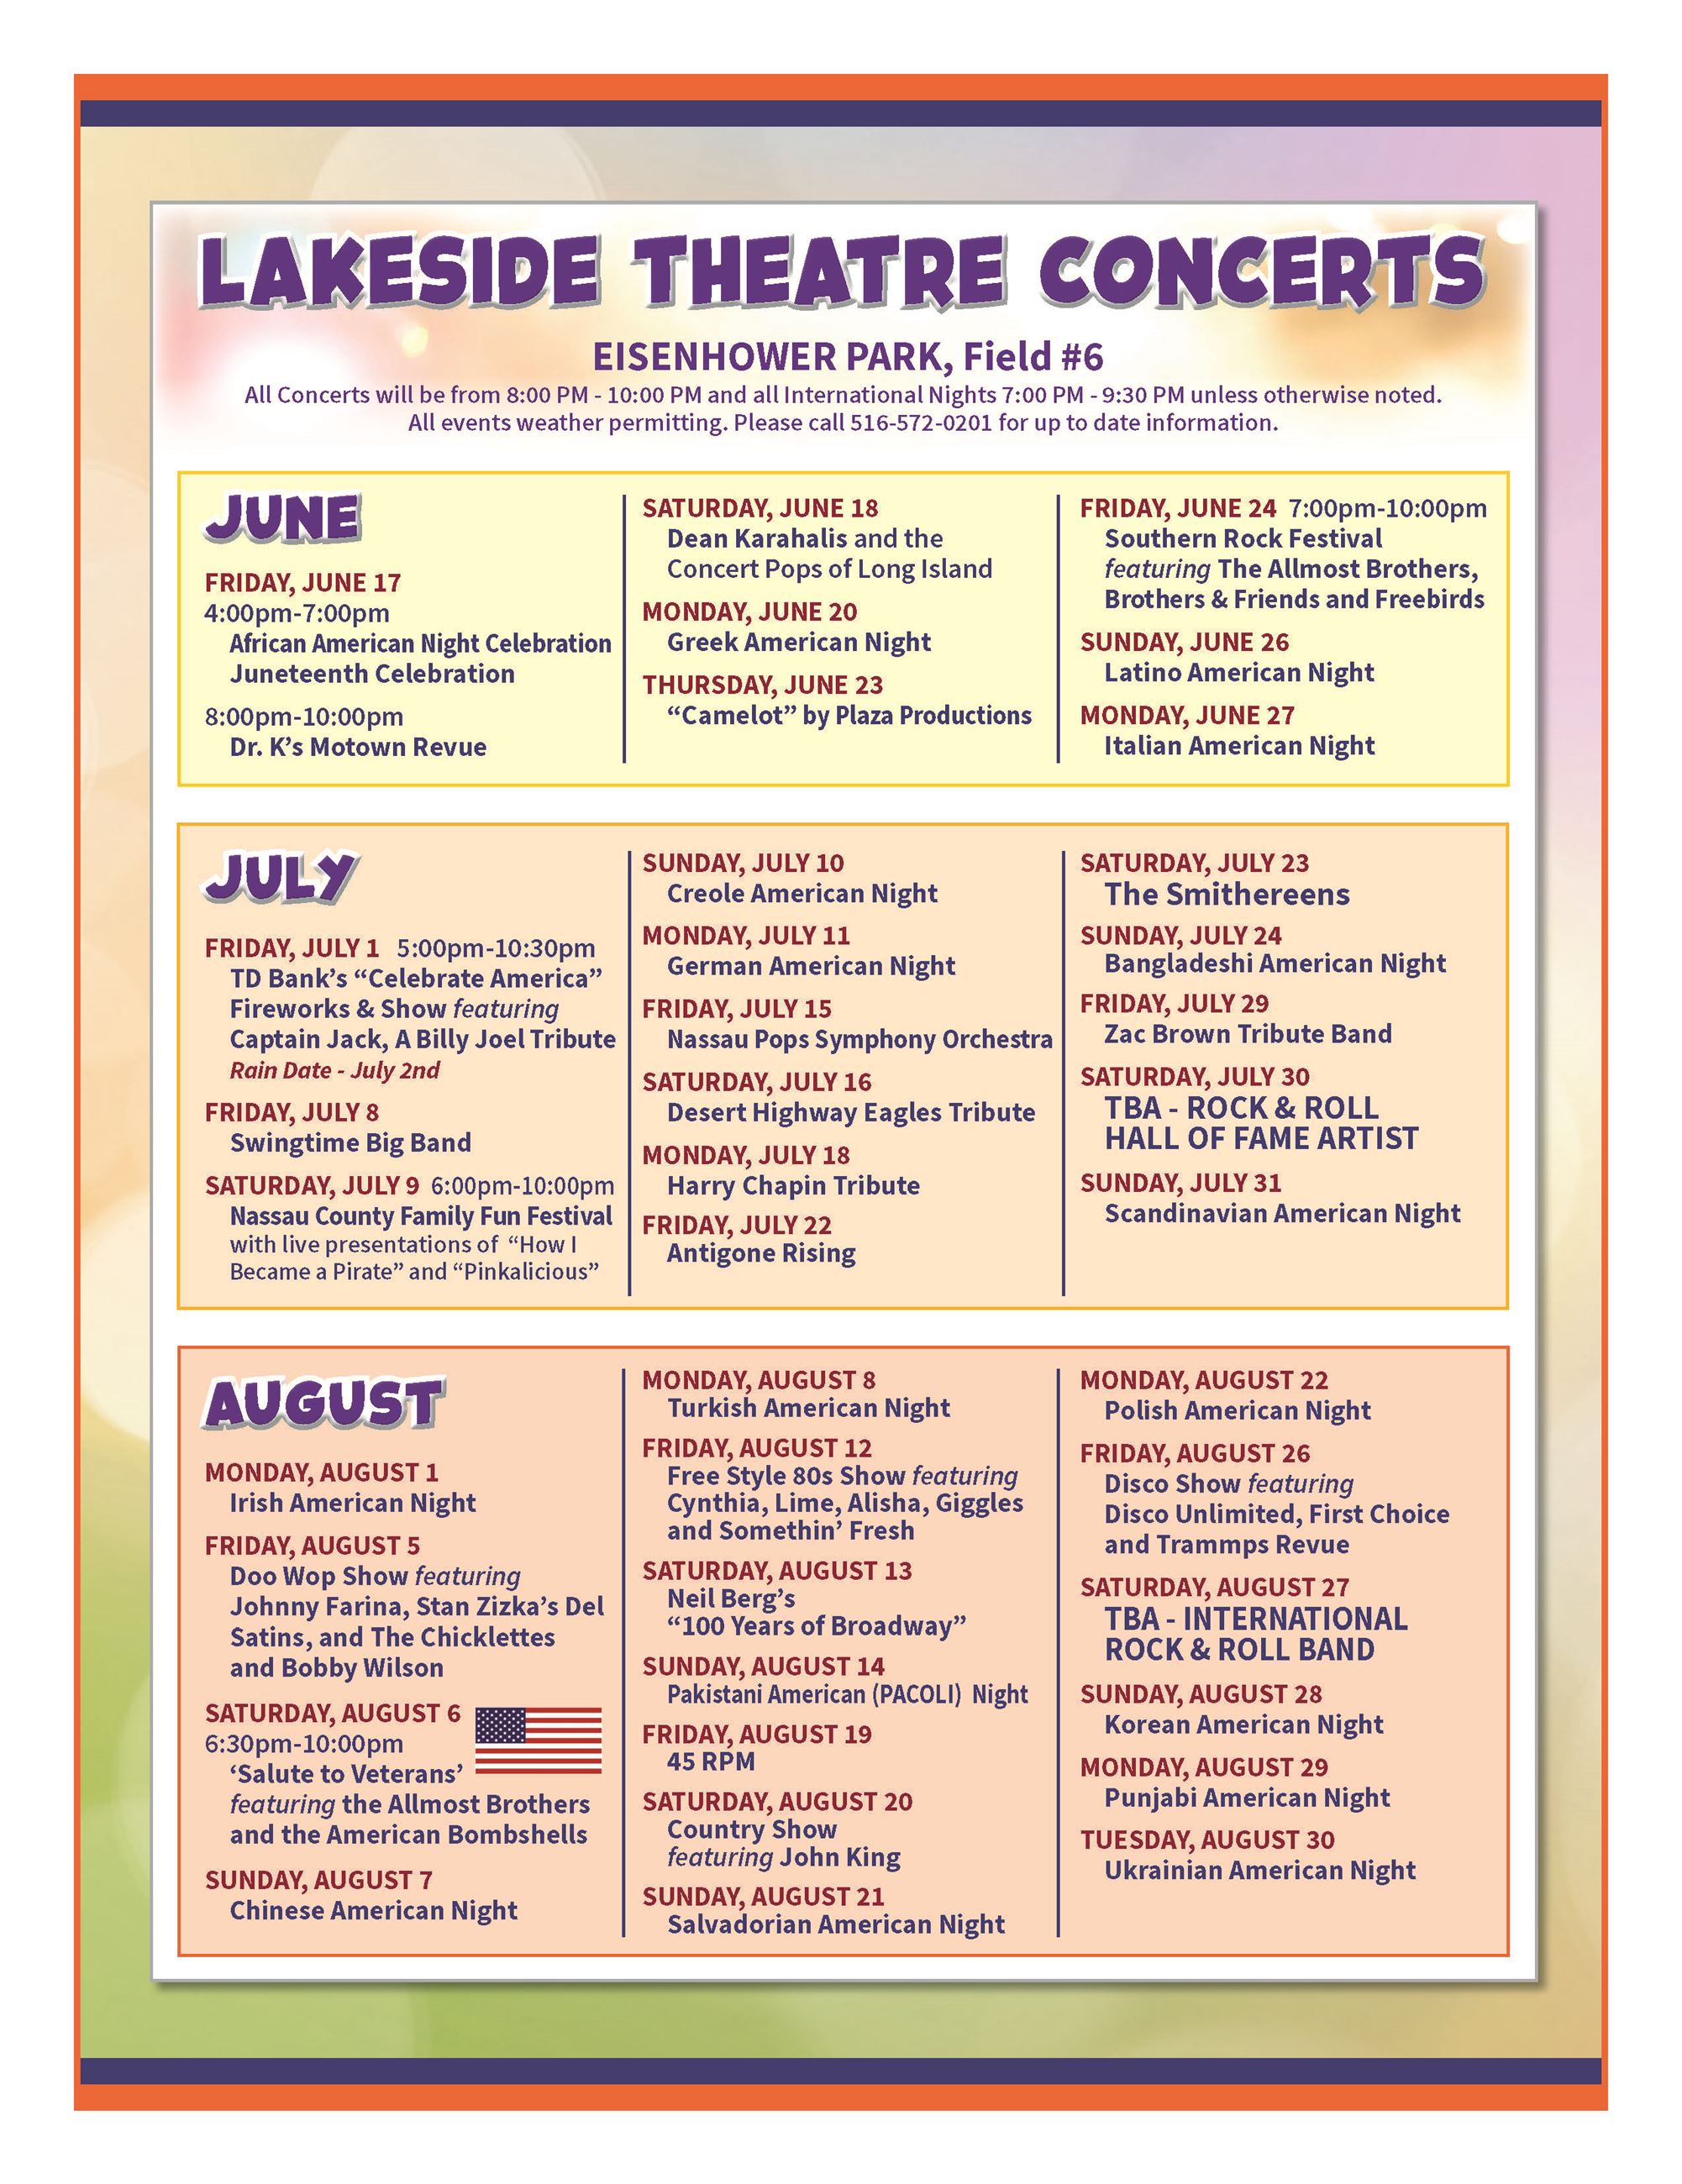 Eisenhower Park Lakeside Theatre Concert Schedule Opens in new window